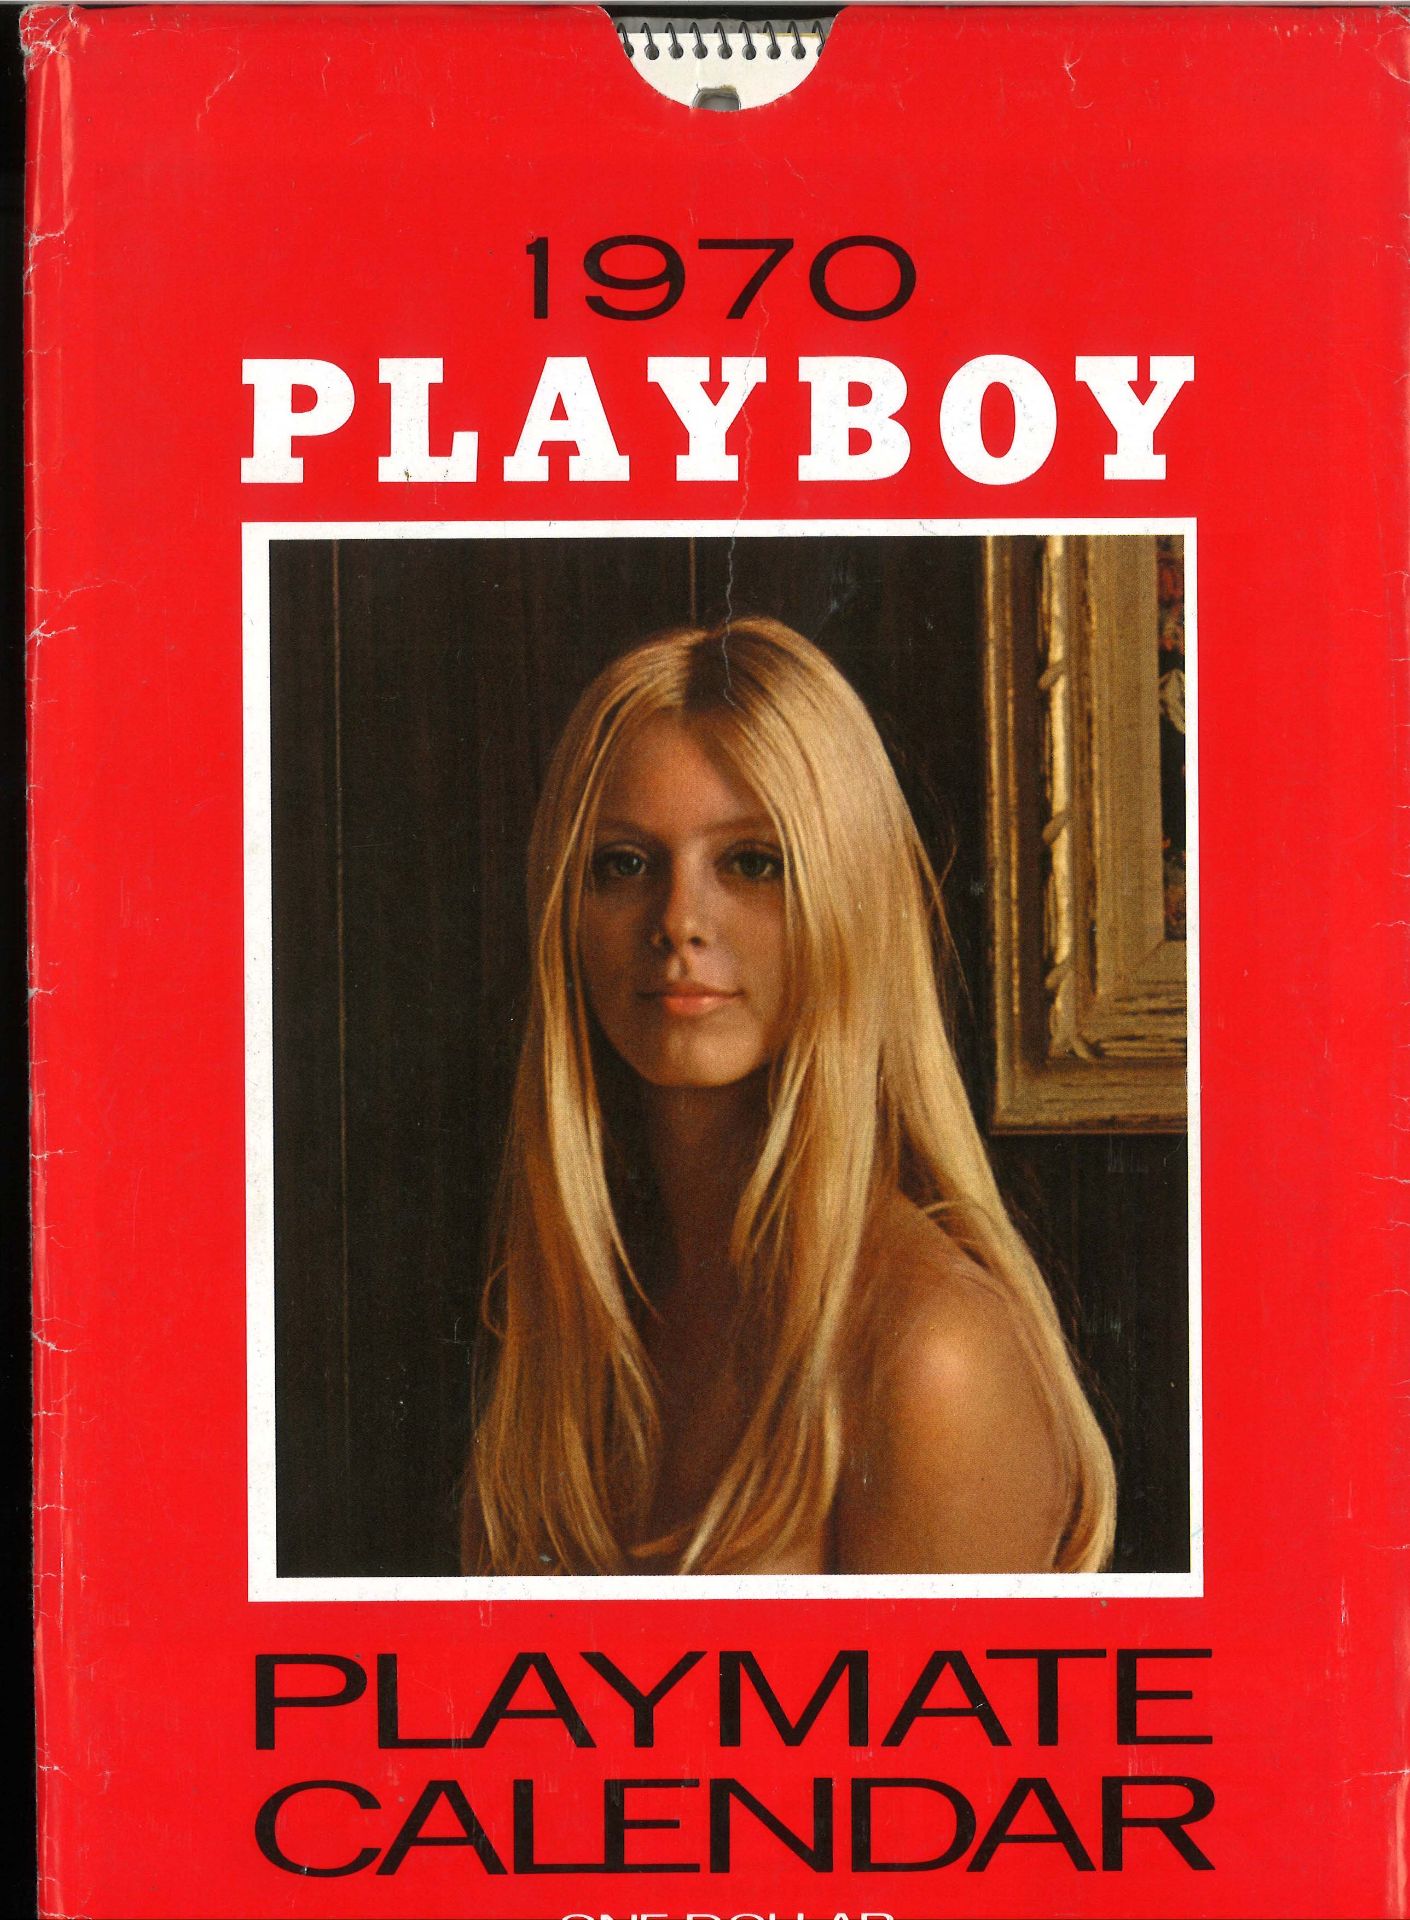 Playboy Kalender - Playmate Calendar 1970. Komplett.